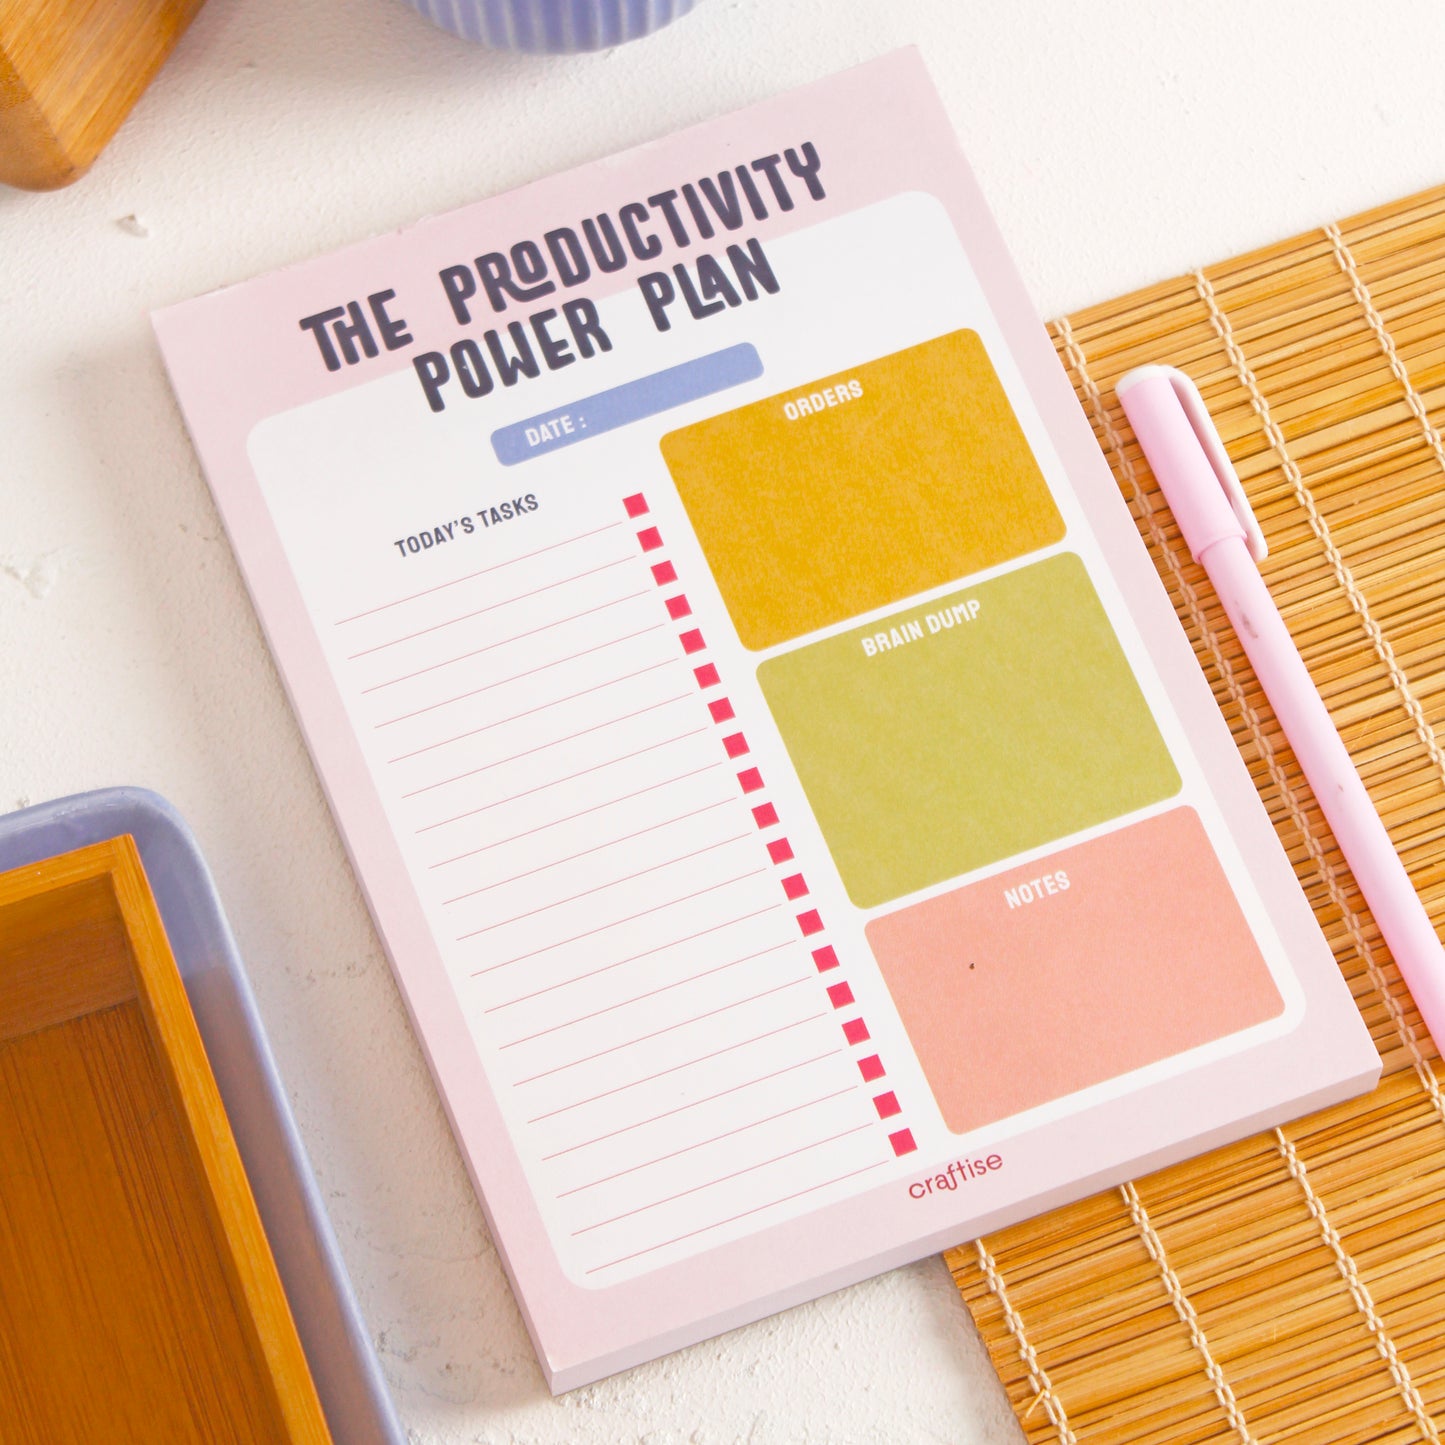 The Productivity Power Plan Notepad